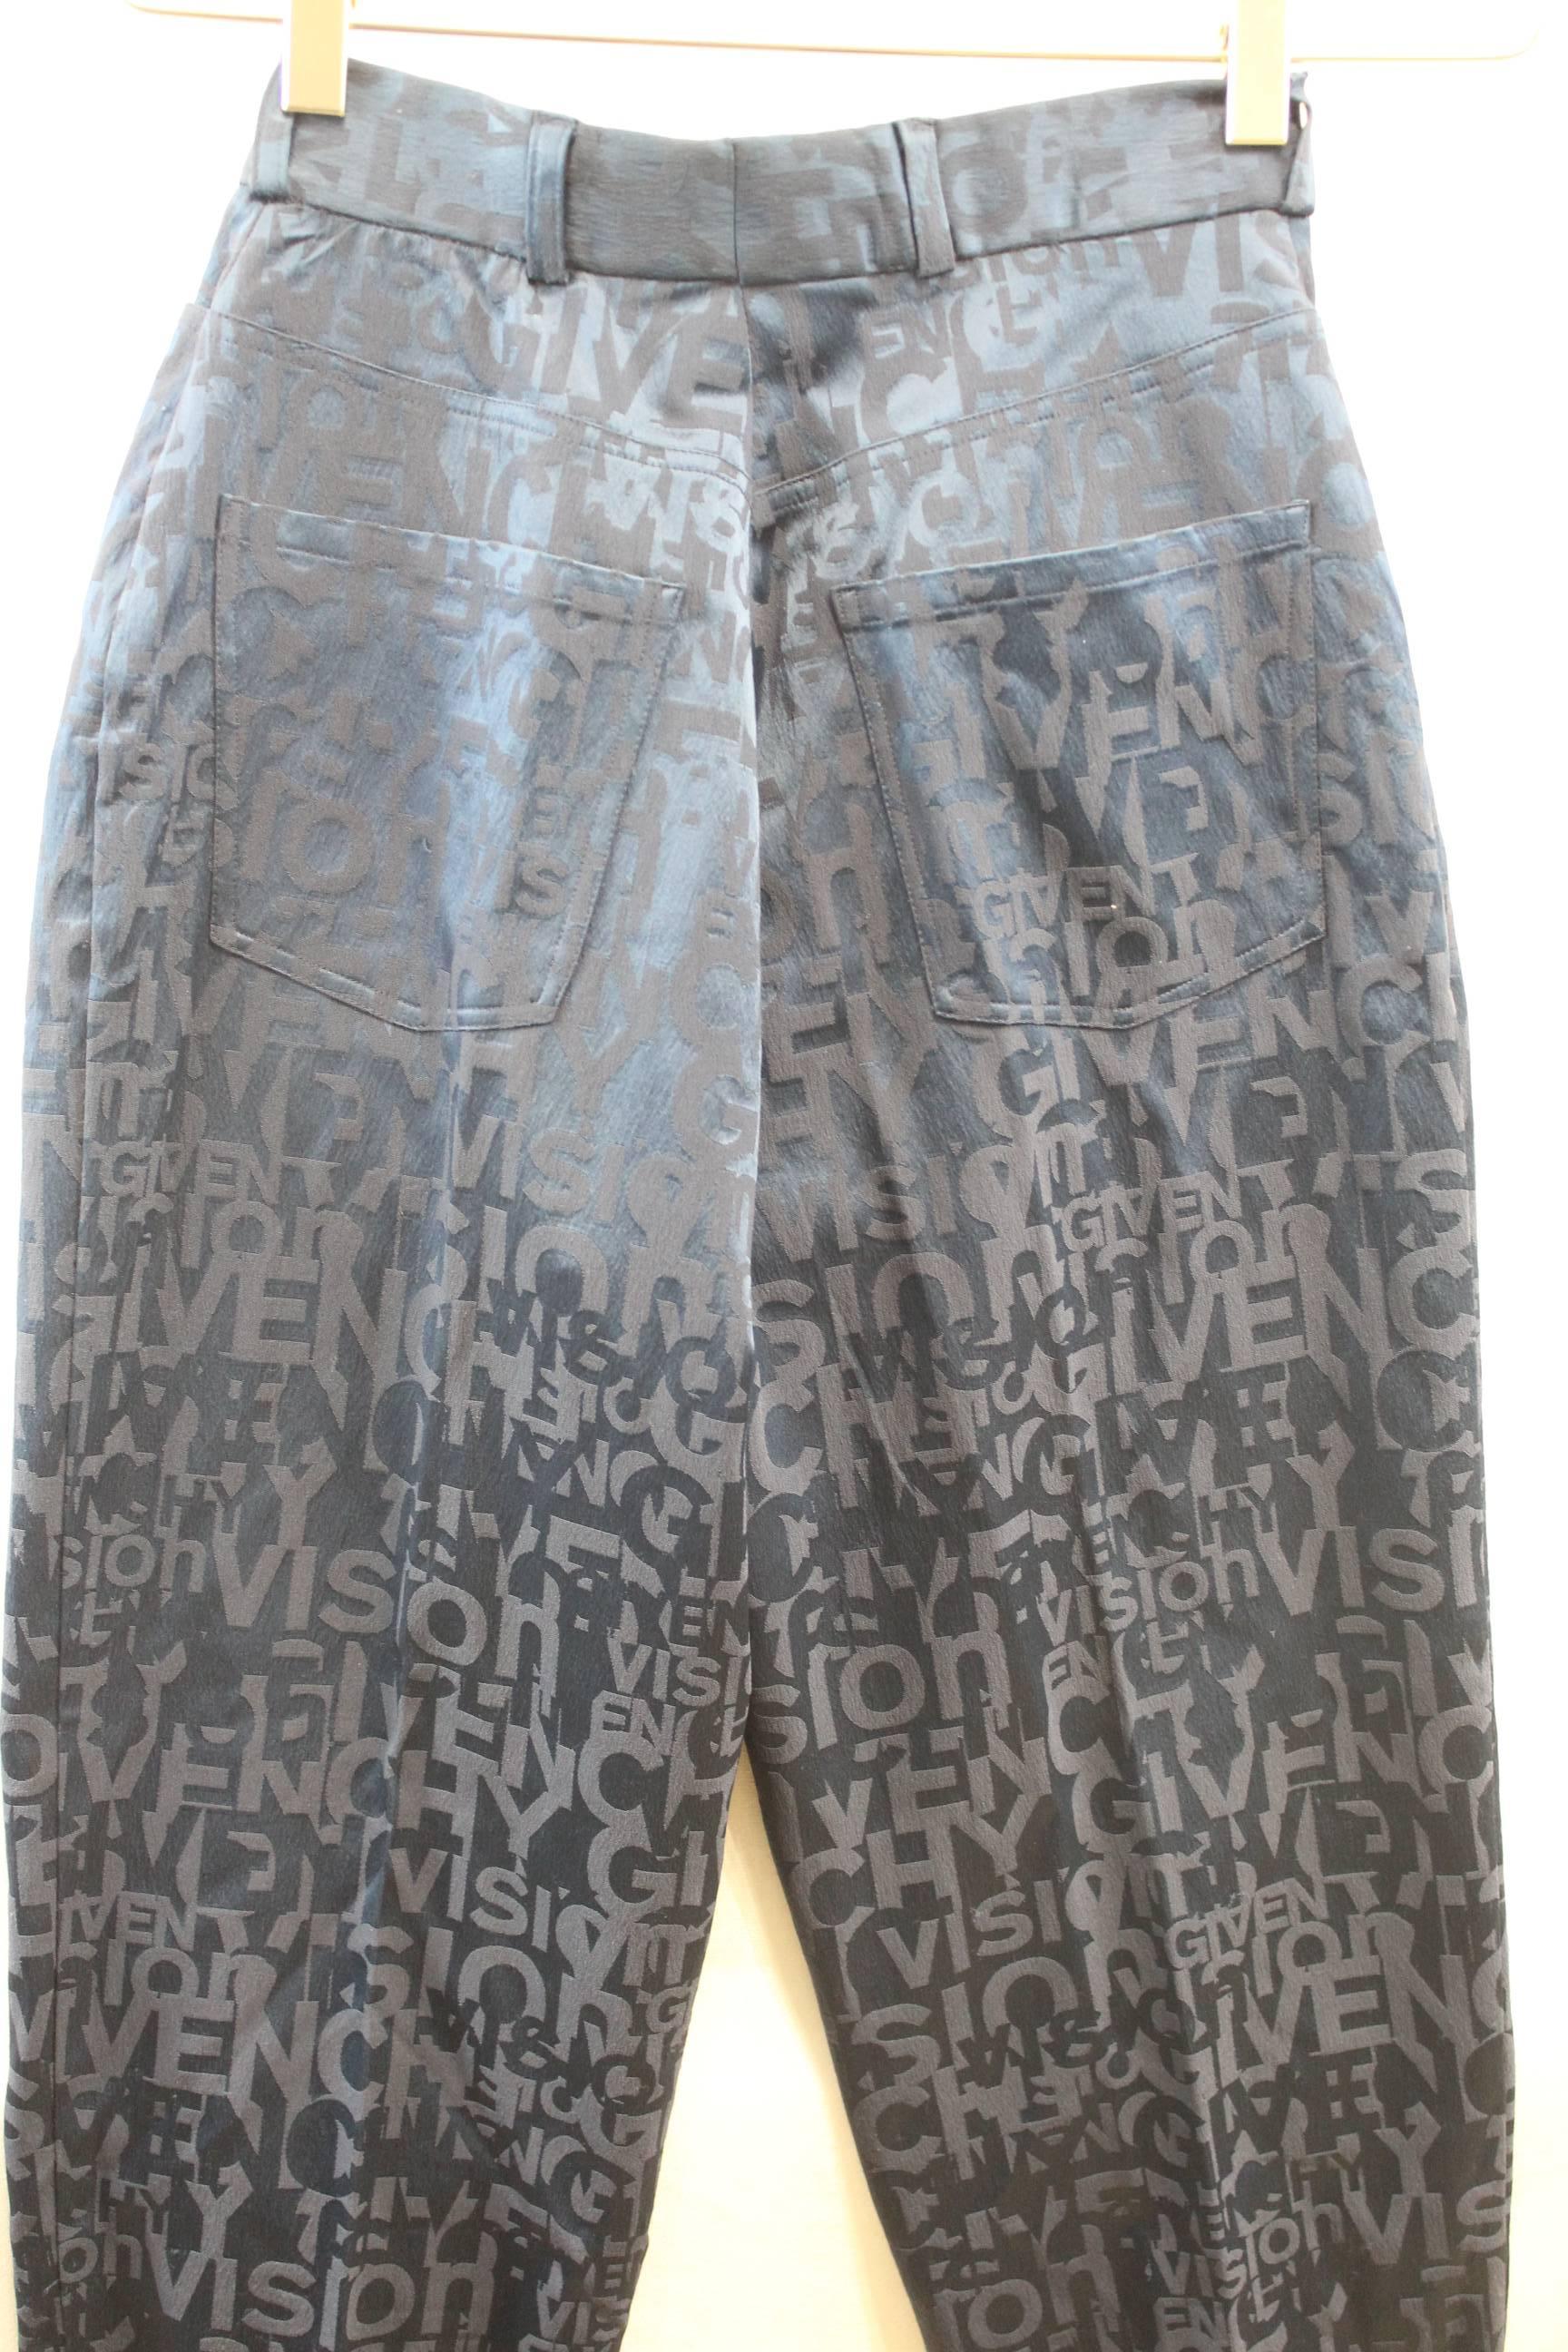 Women's Givenchy Vision Vintage Pants Size FR 36 For Sale